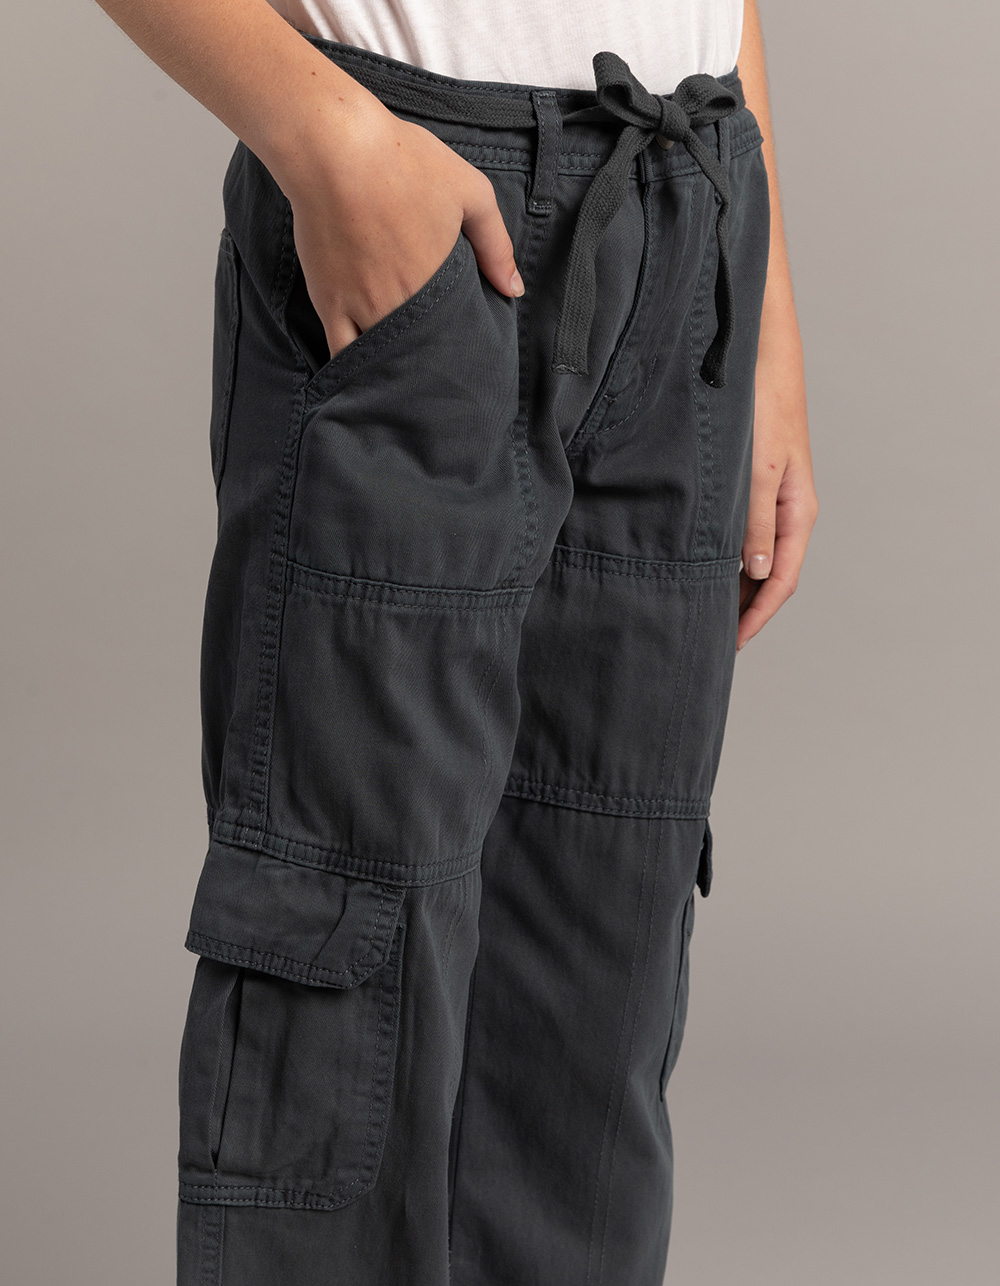 RYRJJ Women's Linen High Waist Pants Drawstring Cargo Capris Pants